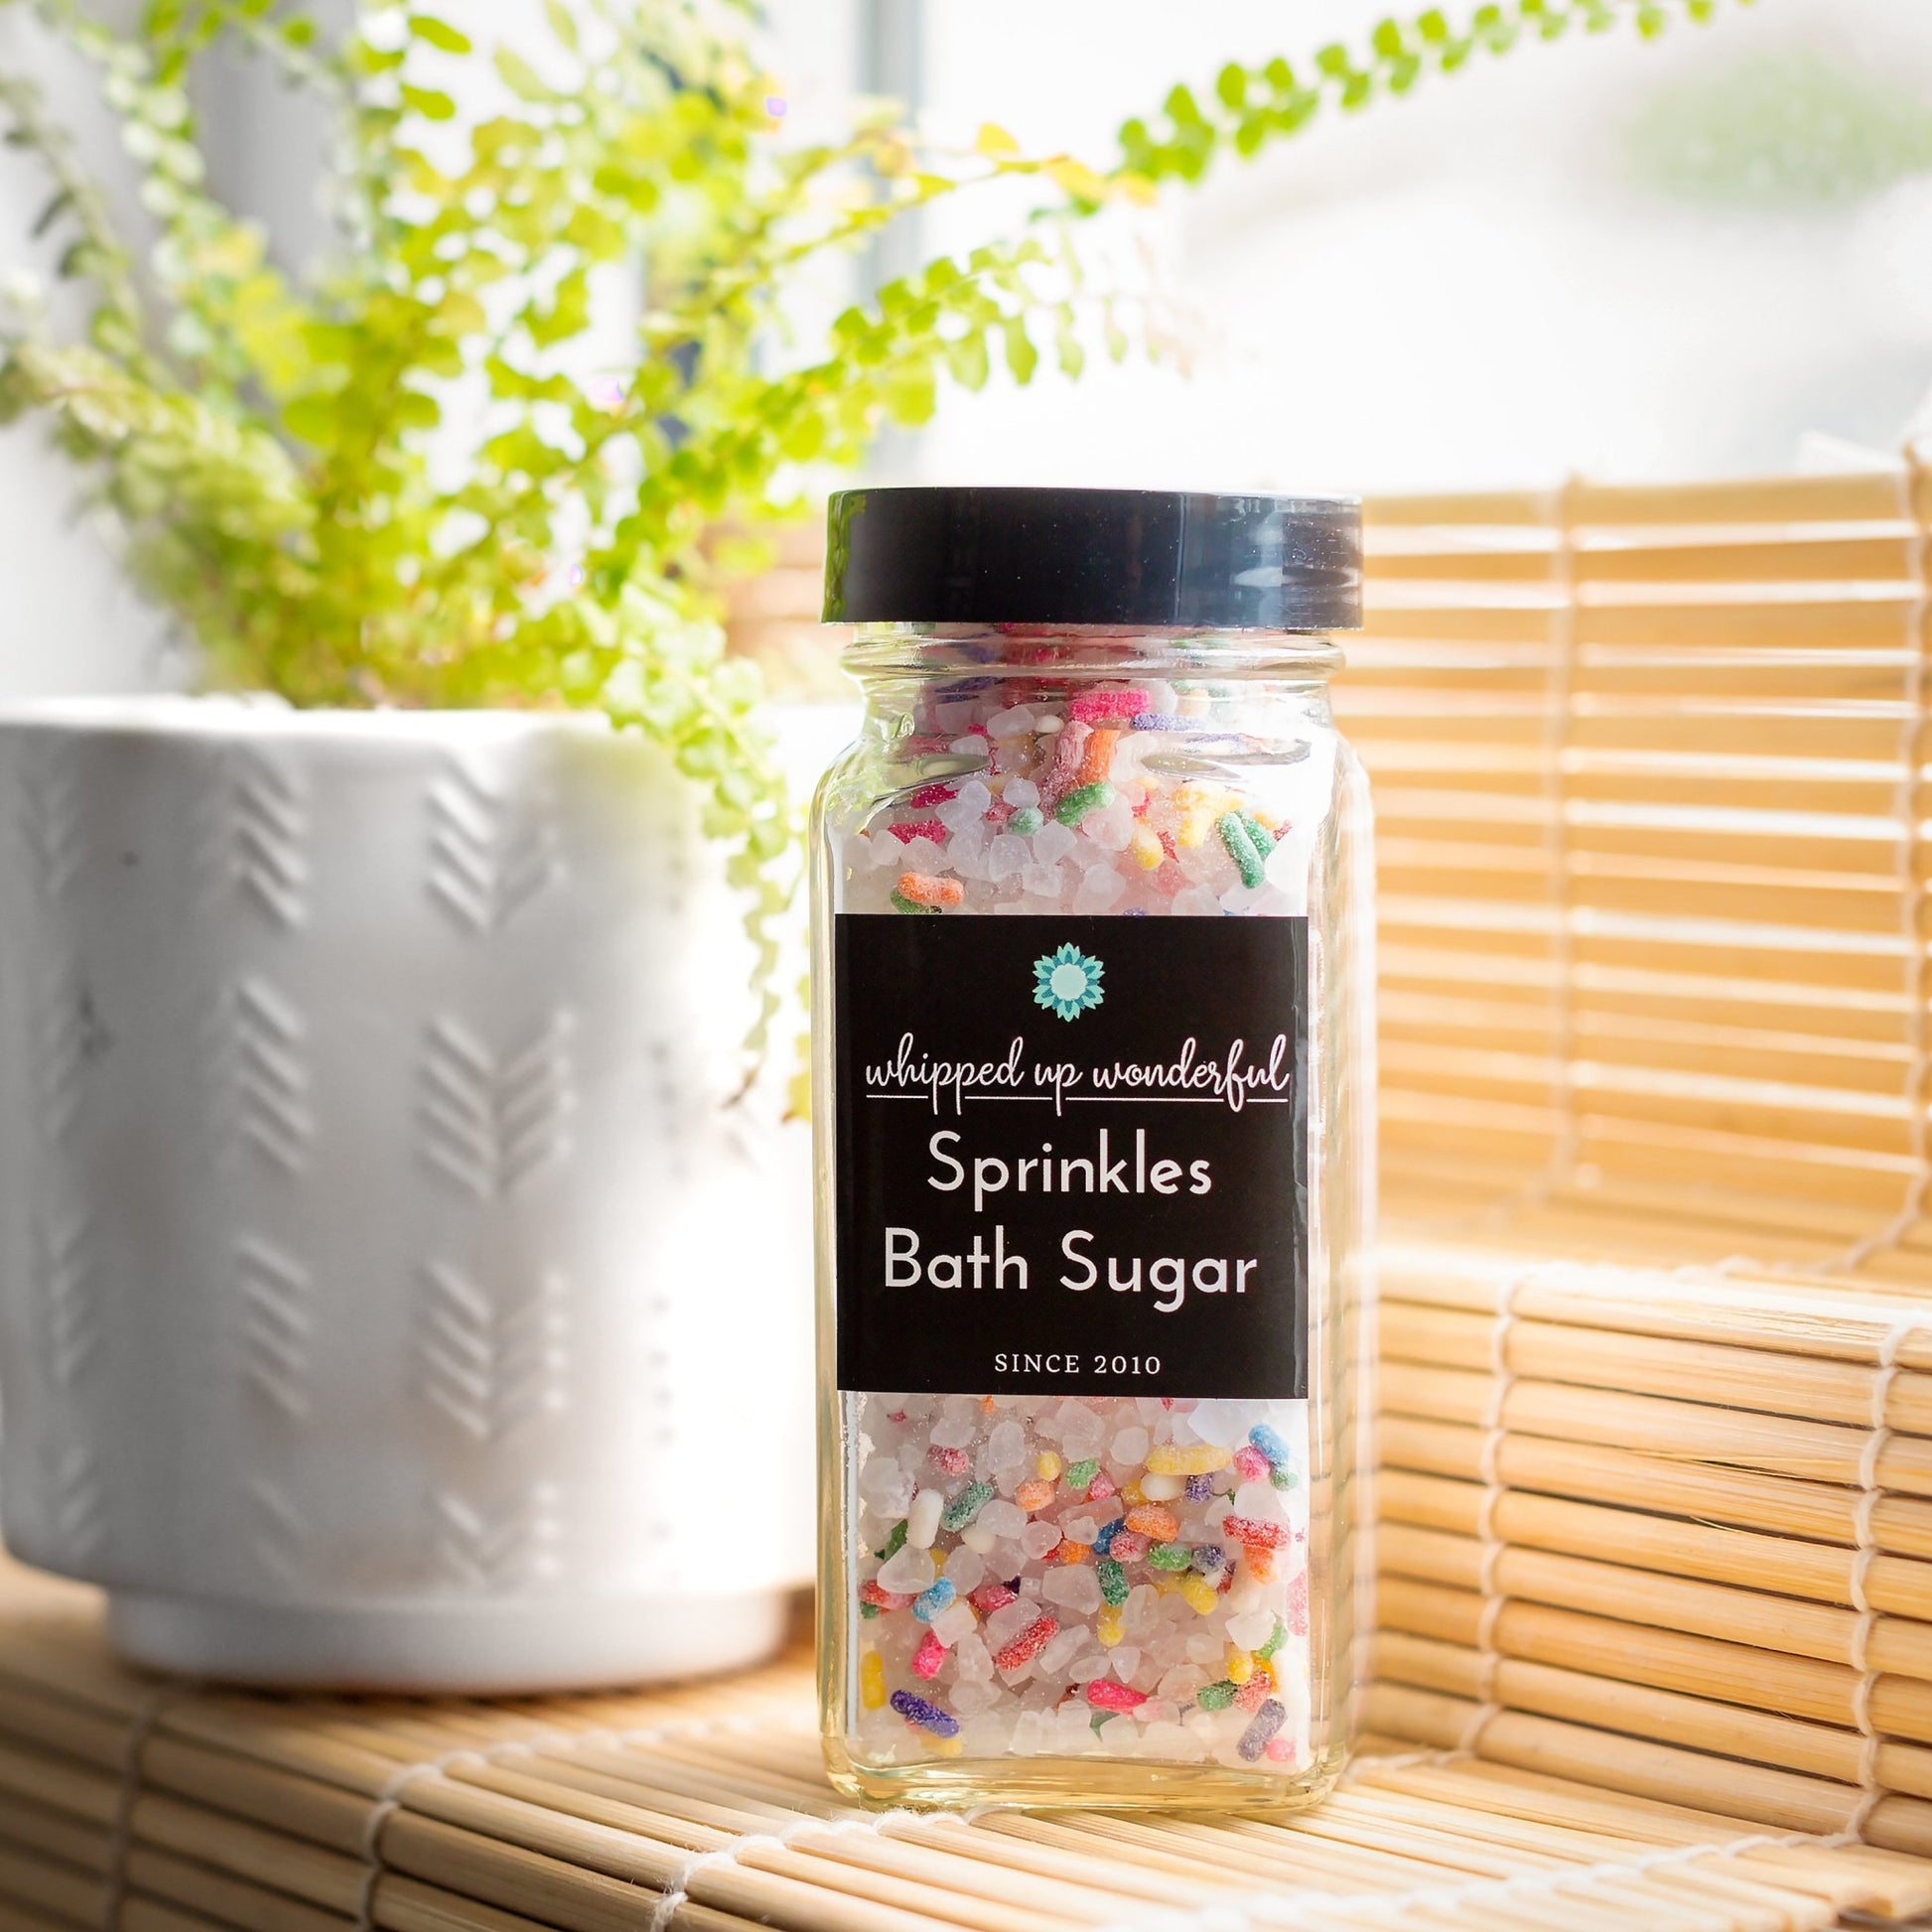 Sprinkles Bath Sugar - Whipped Up Wonderful